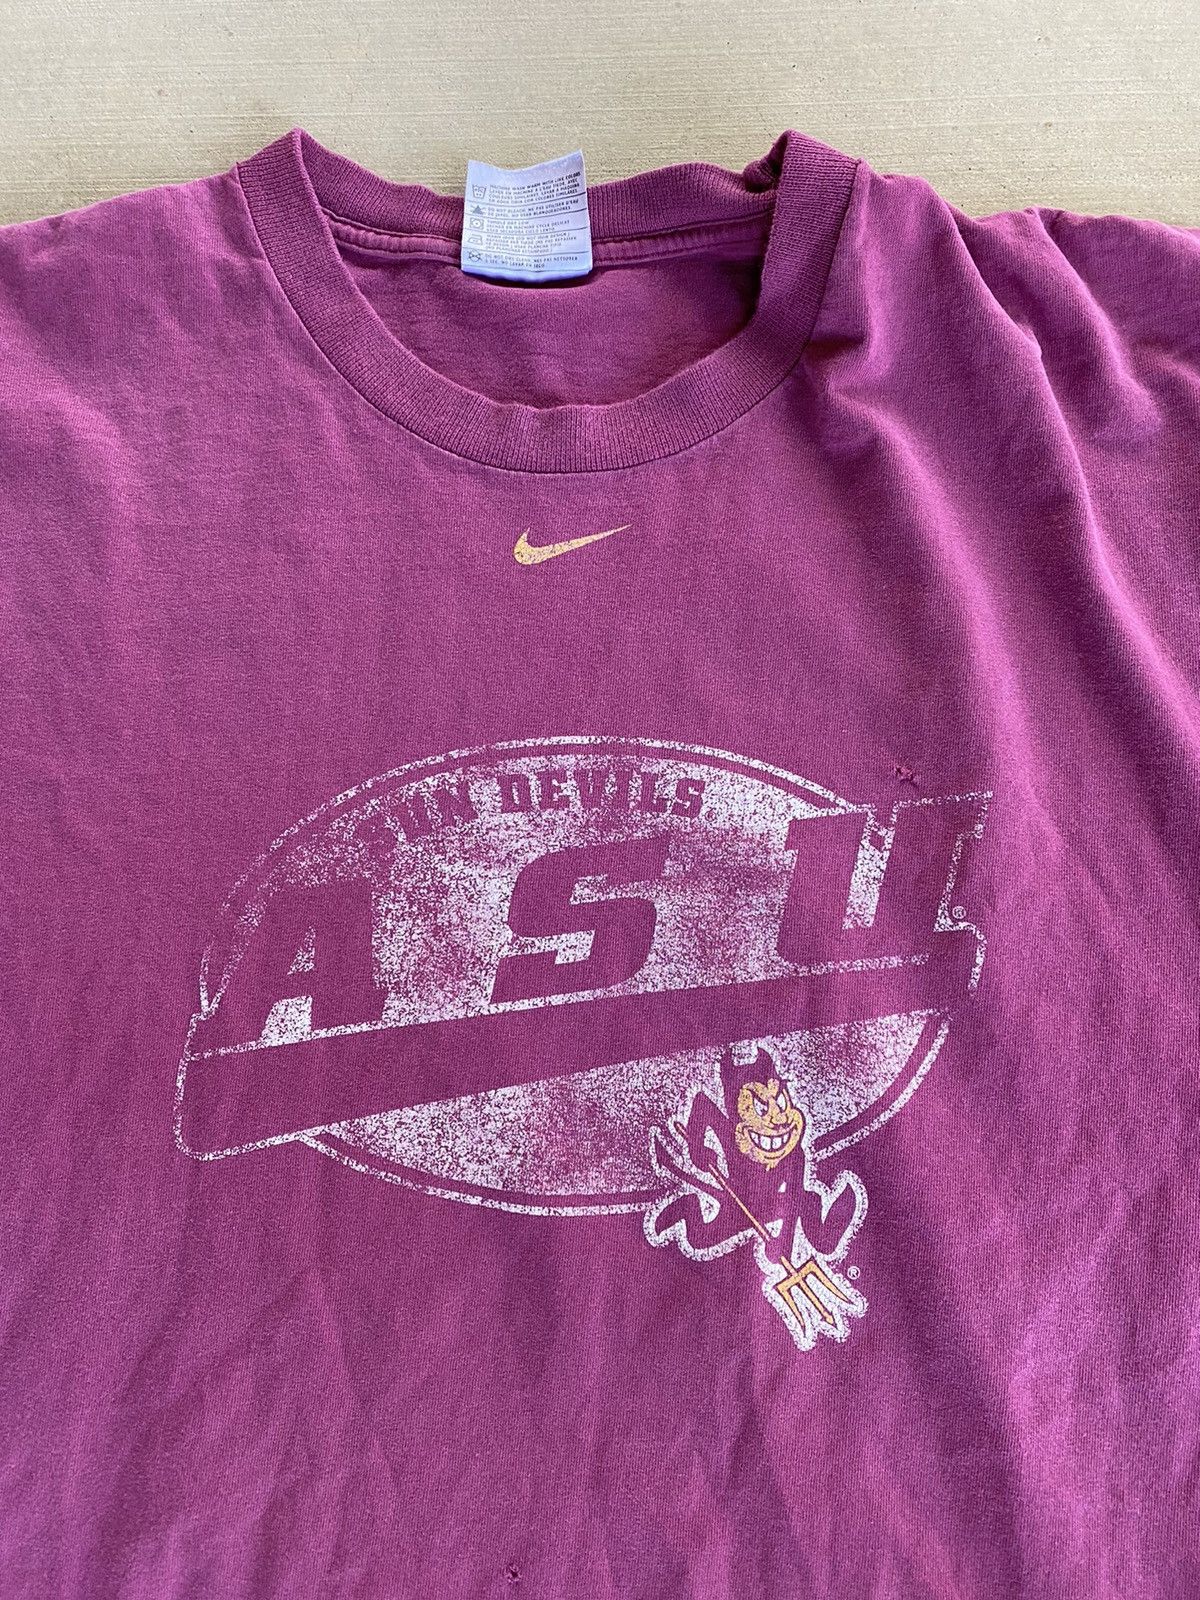 Nike Vintage Center Check ASU Shirt Size US XL / EU 56 / 4 - 2 Preview